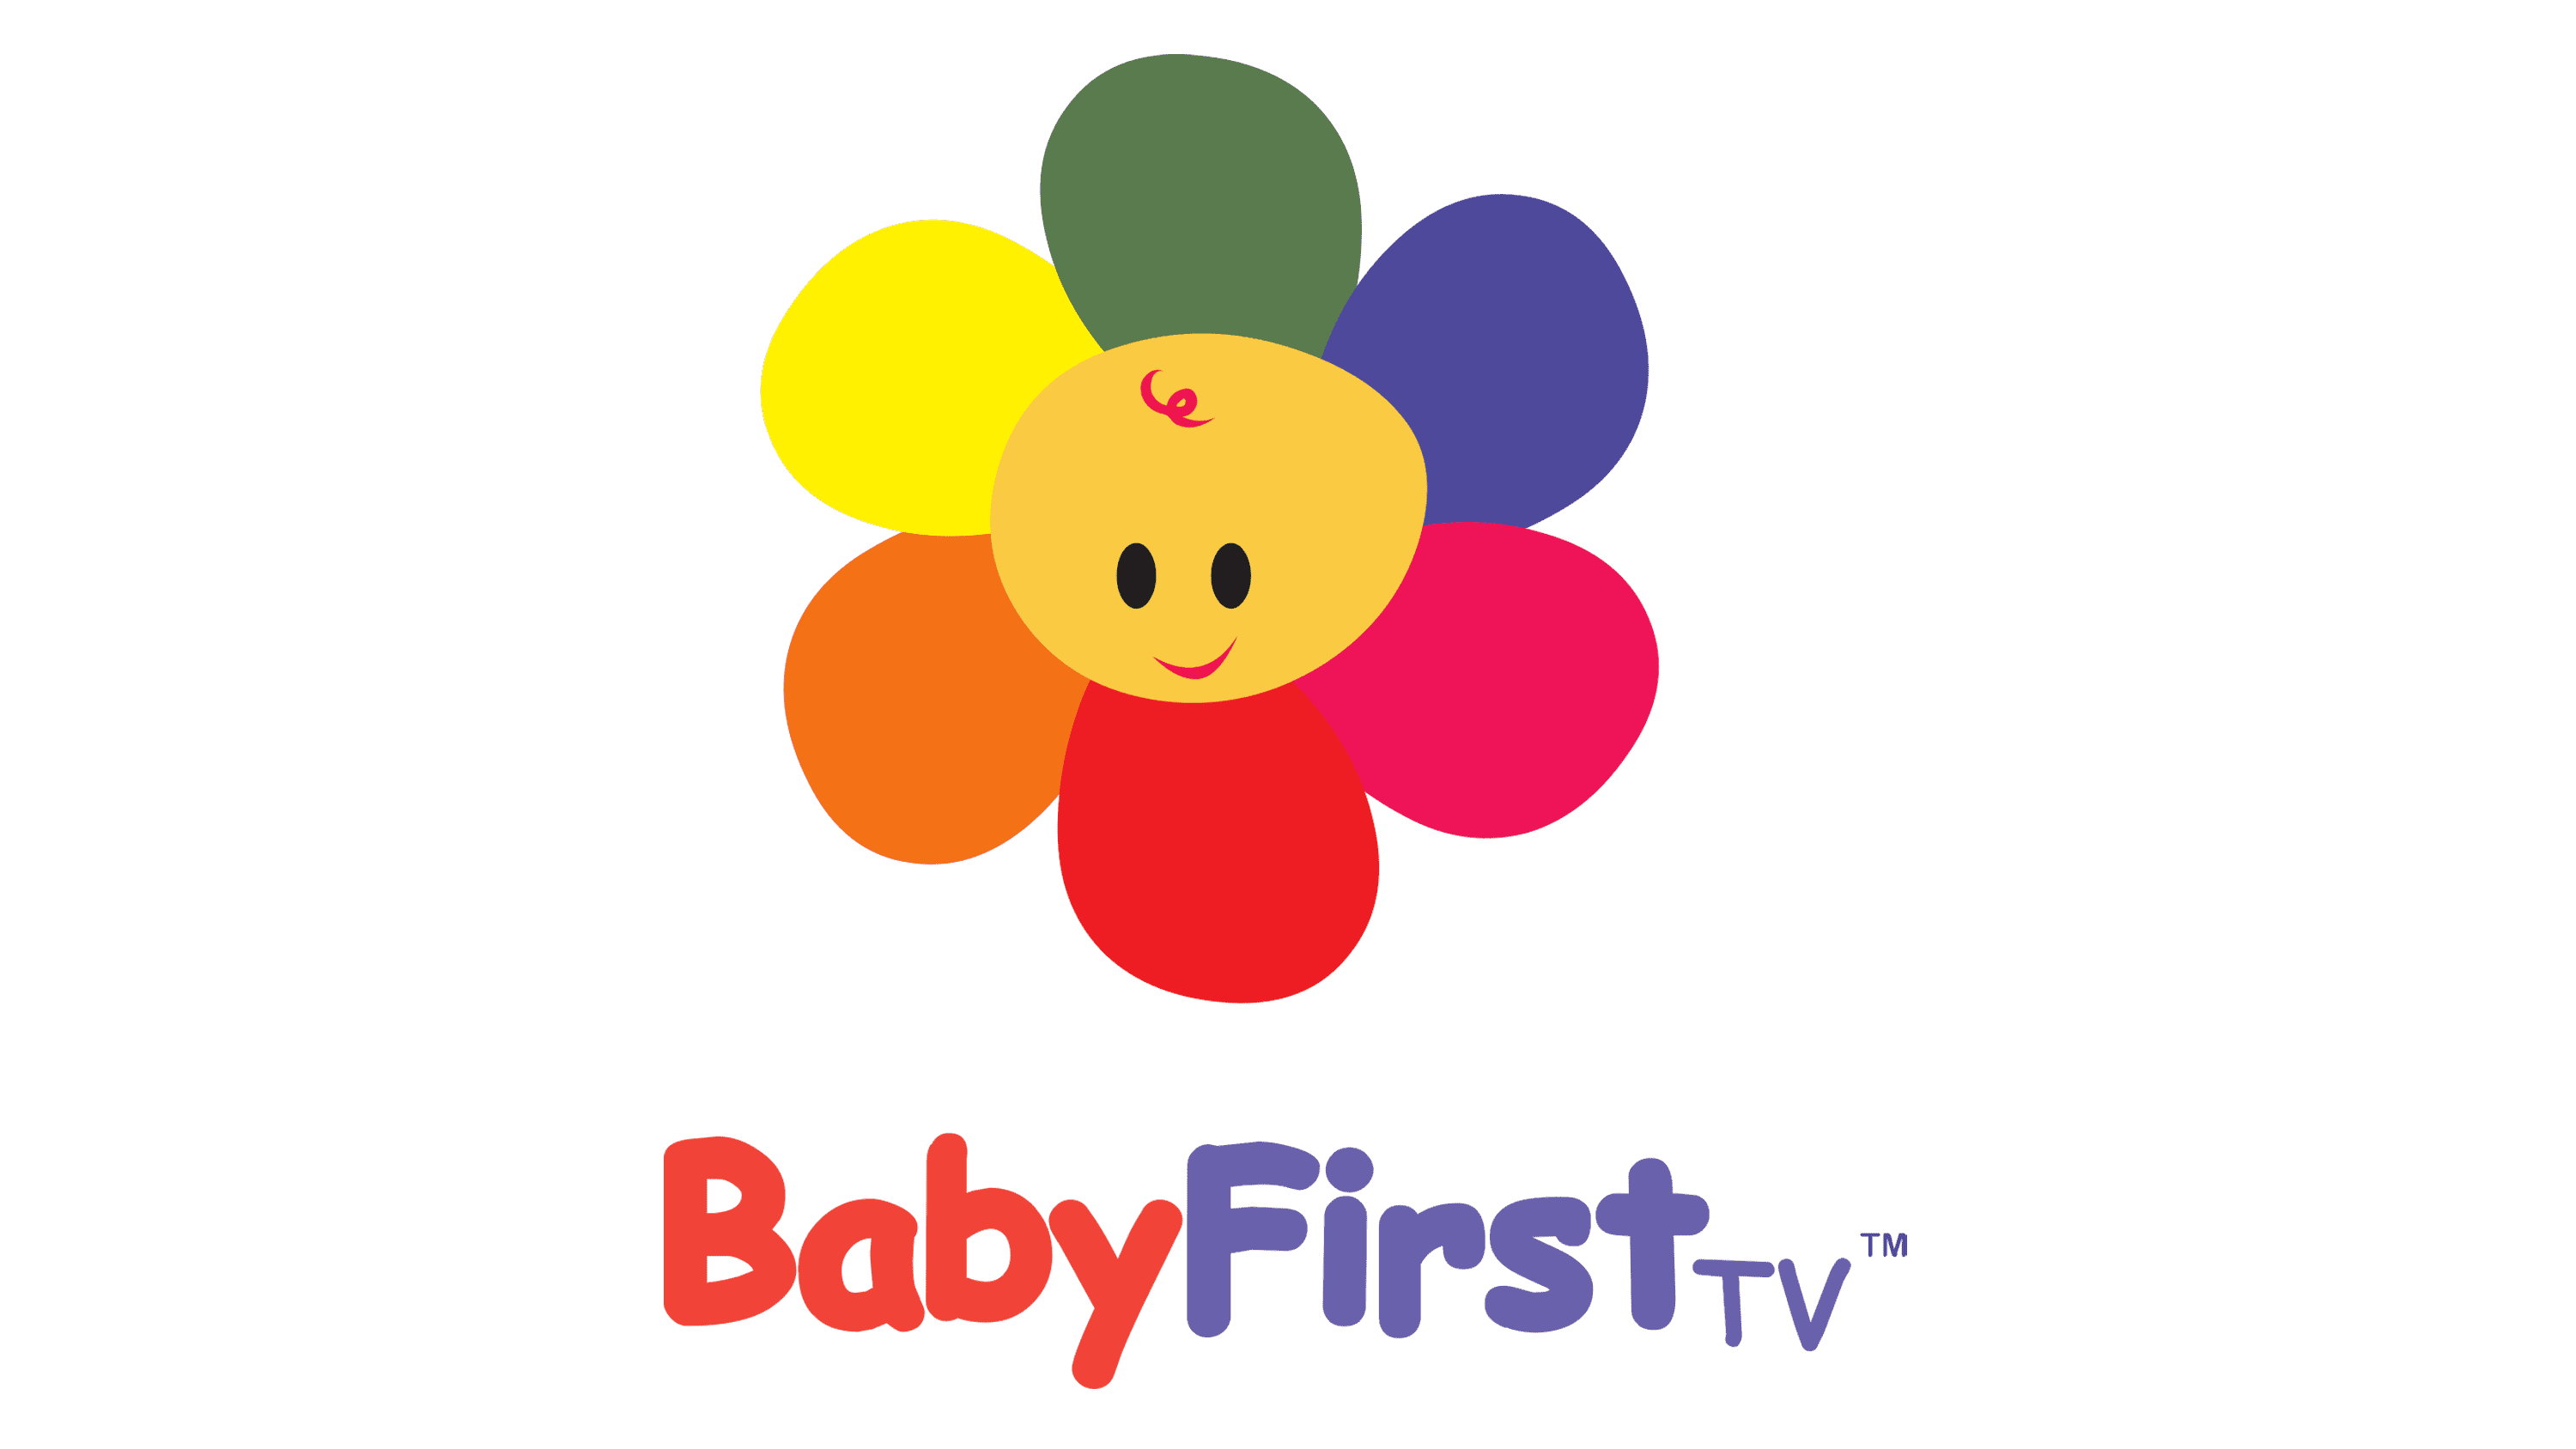 https://1000logos.net/wp-content/uploads/2022/09/BabyFirstTV-Logo-2006.png